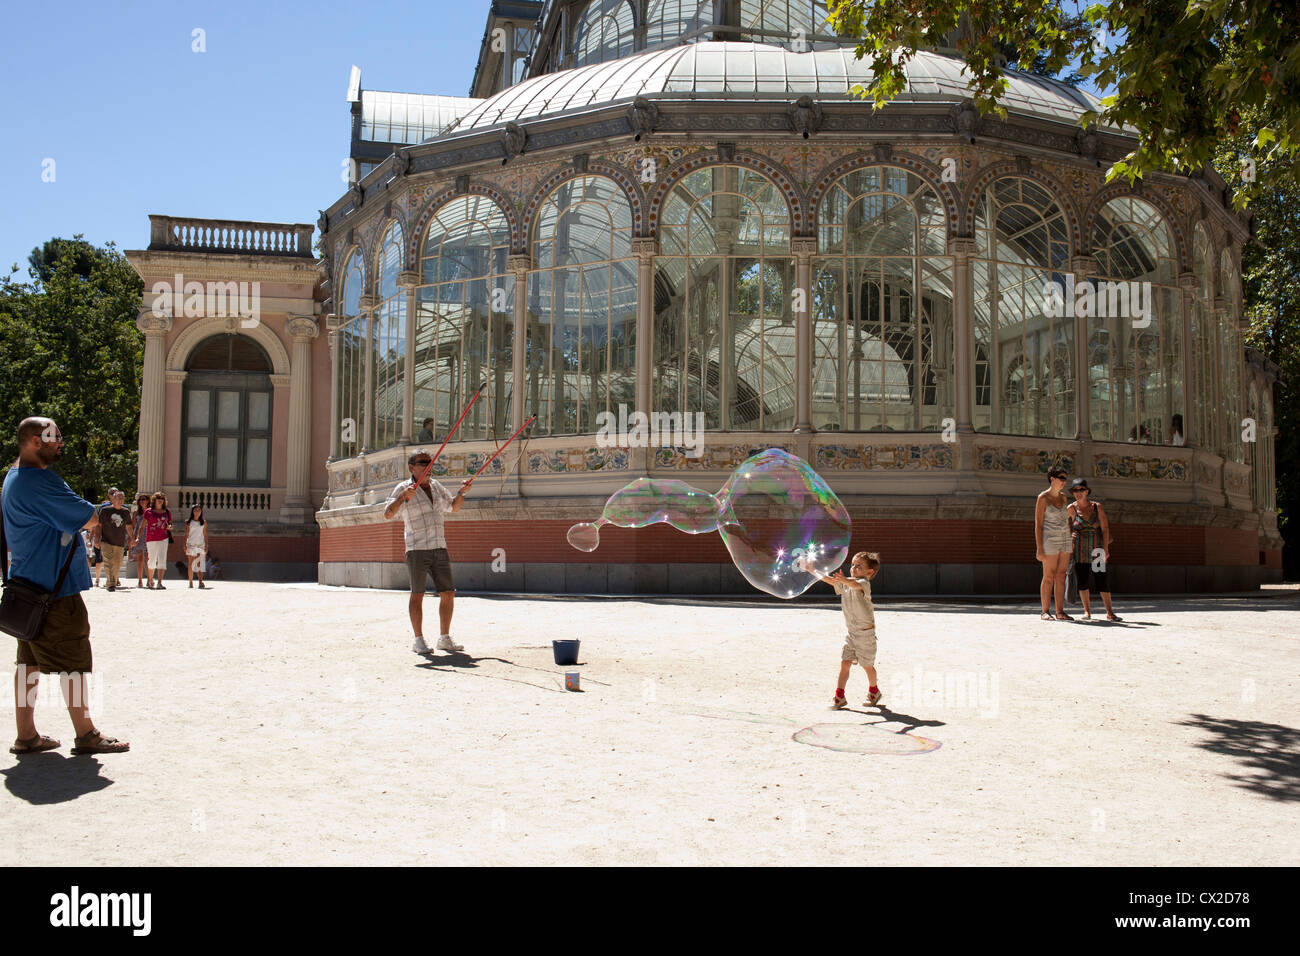 A boy tries to burst a soap bubble outside the Palacio de Cristal in the Retiro Park, Madrid, Spain. Stock Photo